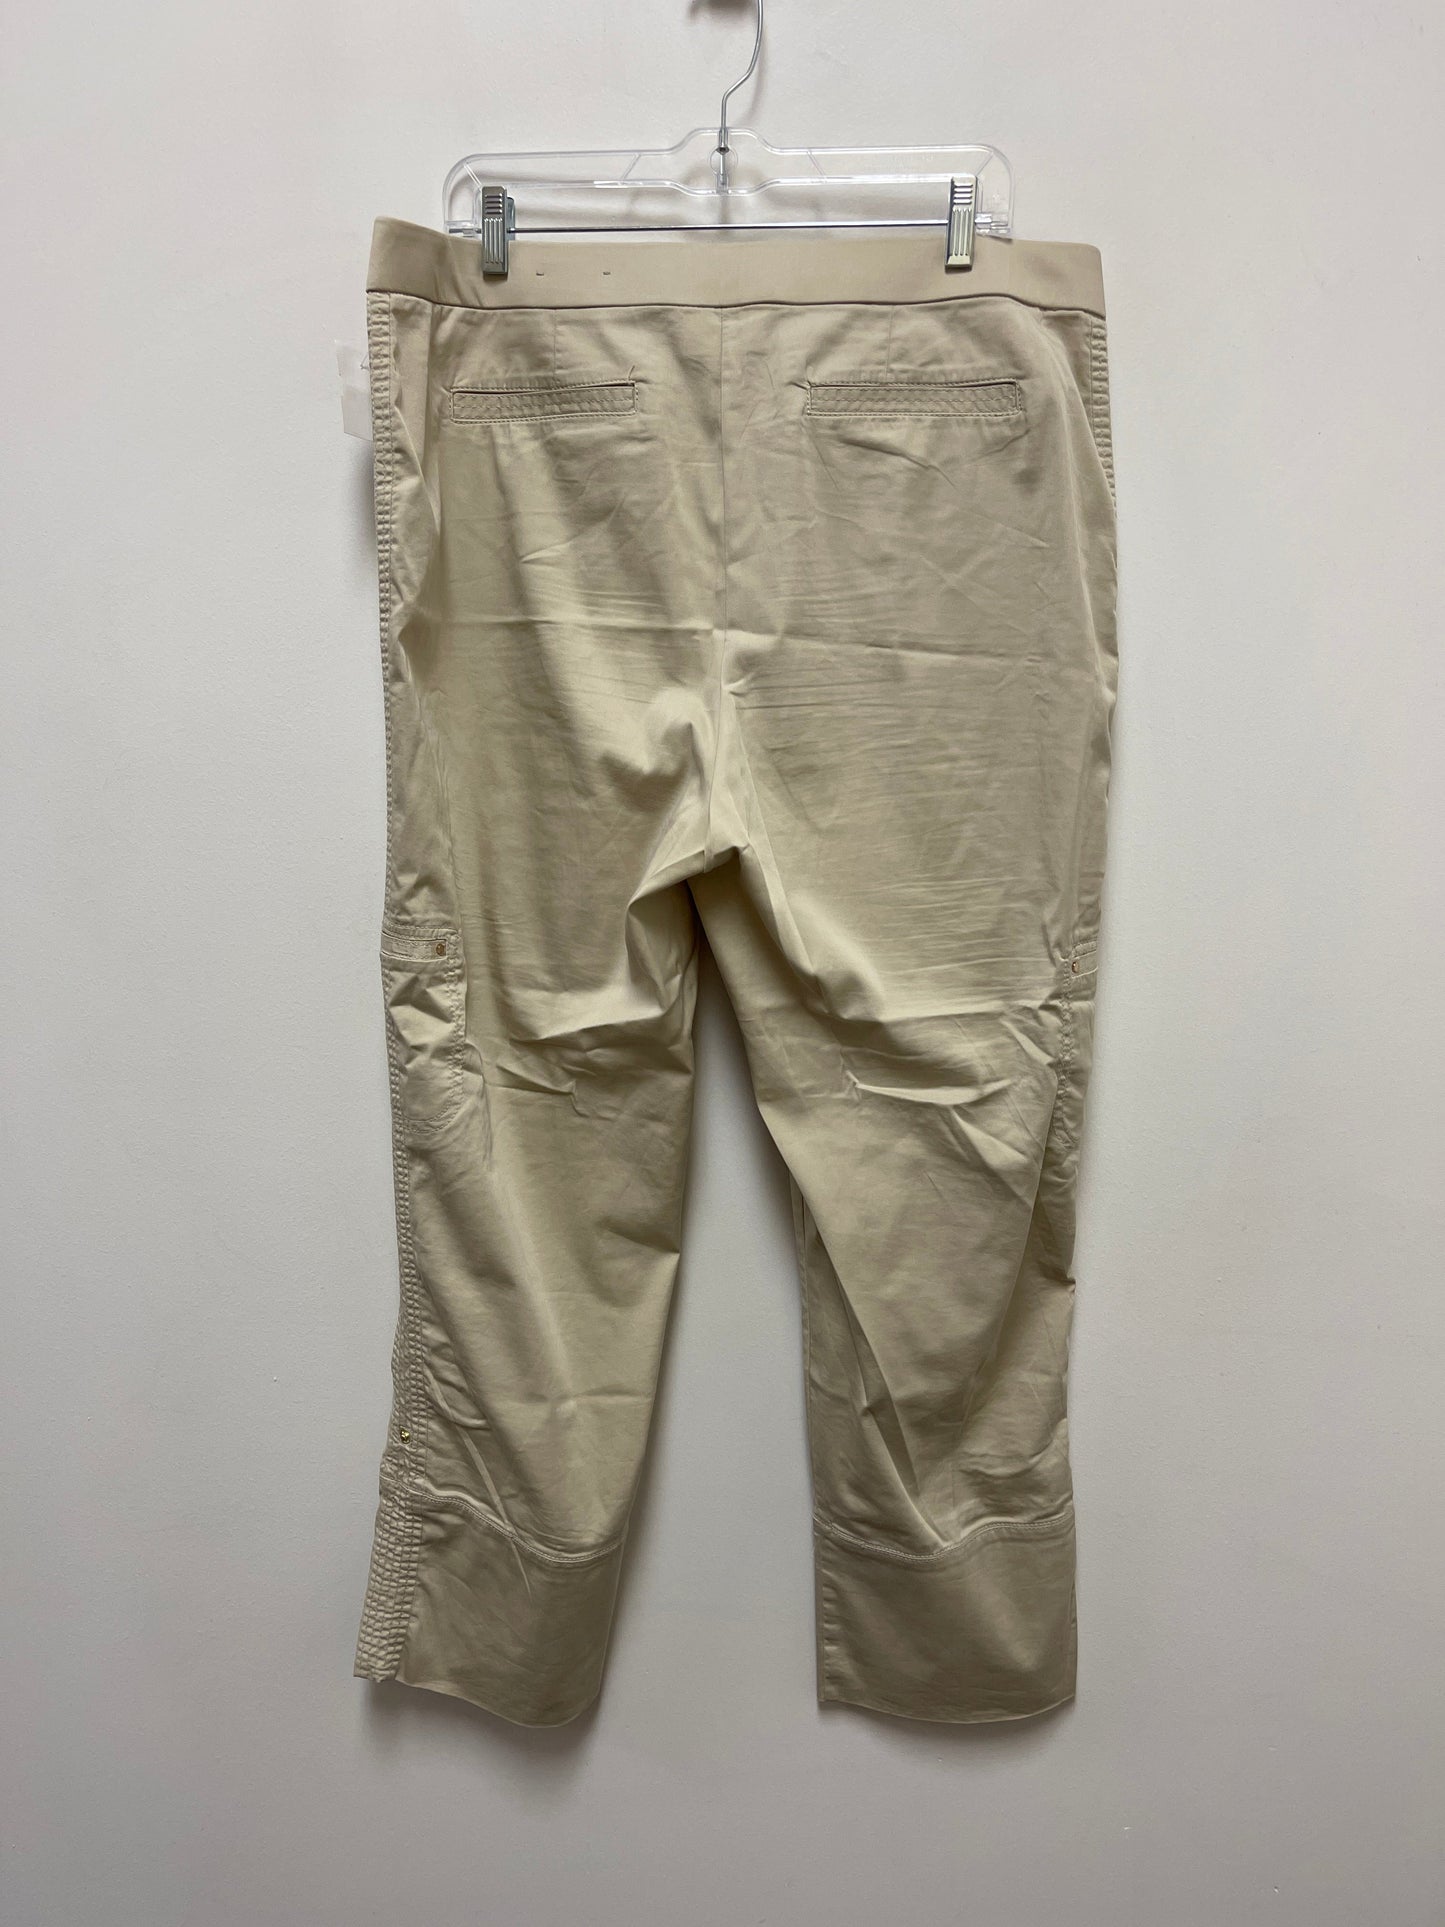 Tan Pants Cargo & Utility Chicos, Size 14